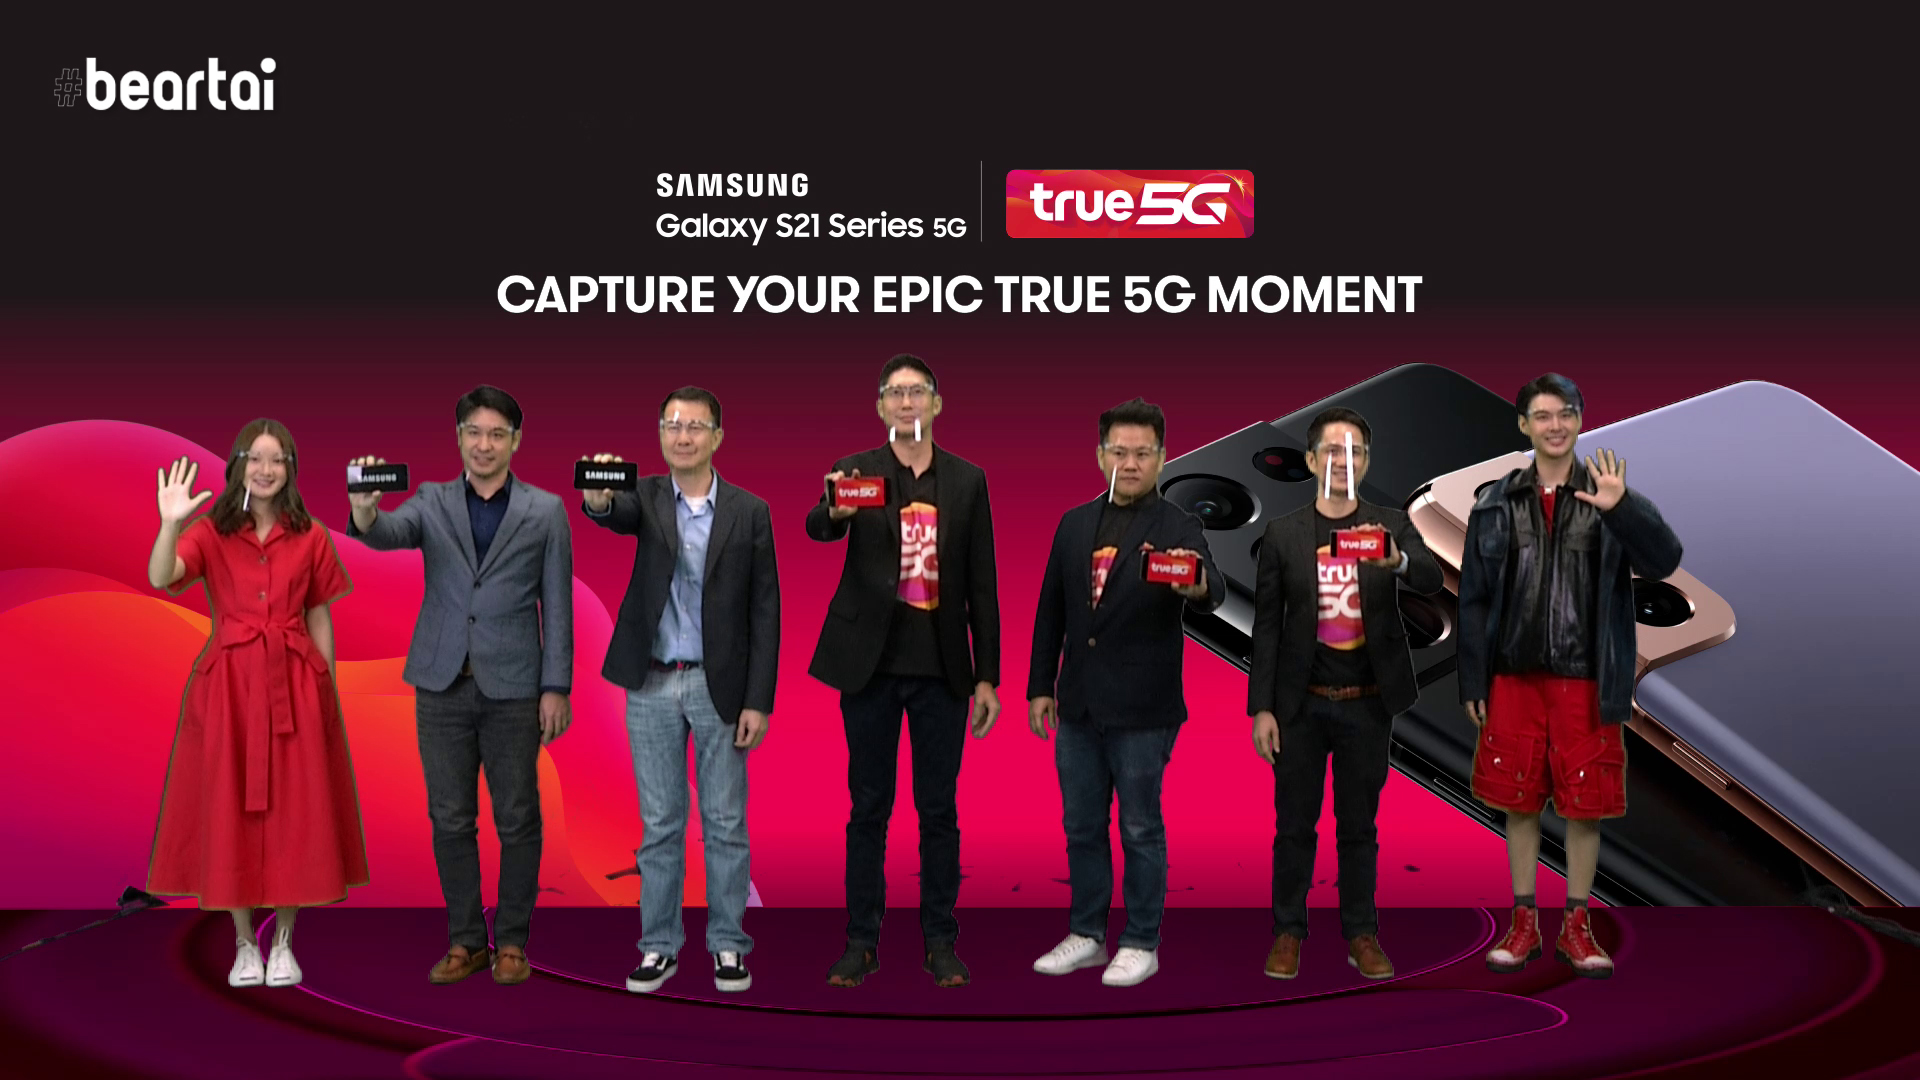 True 5G ล้ำสุดในไทย ส่งมอบเครื่องที่เหนือกว่า กับงาน “CAPTURE YOUR EPIC TRUE 5G MOMENT”